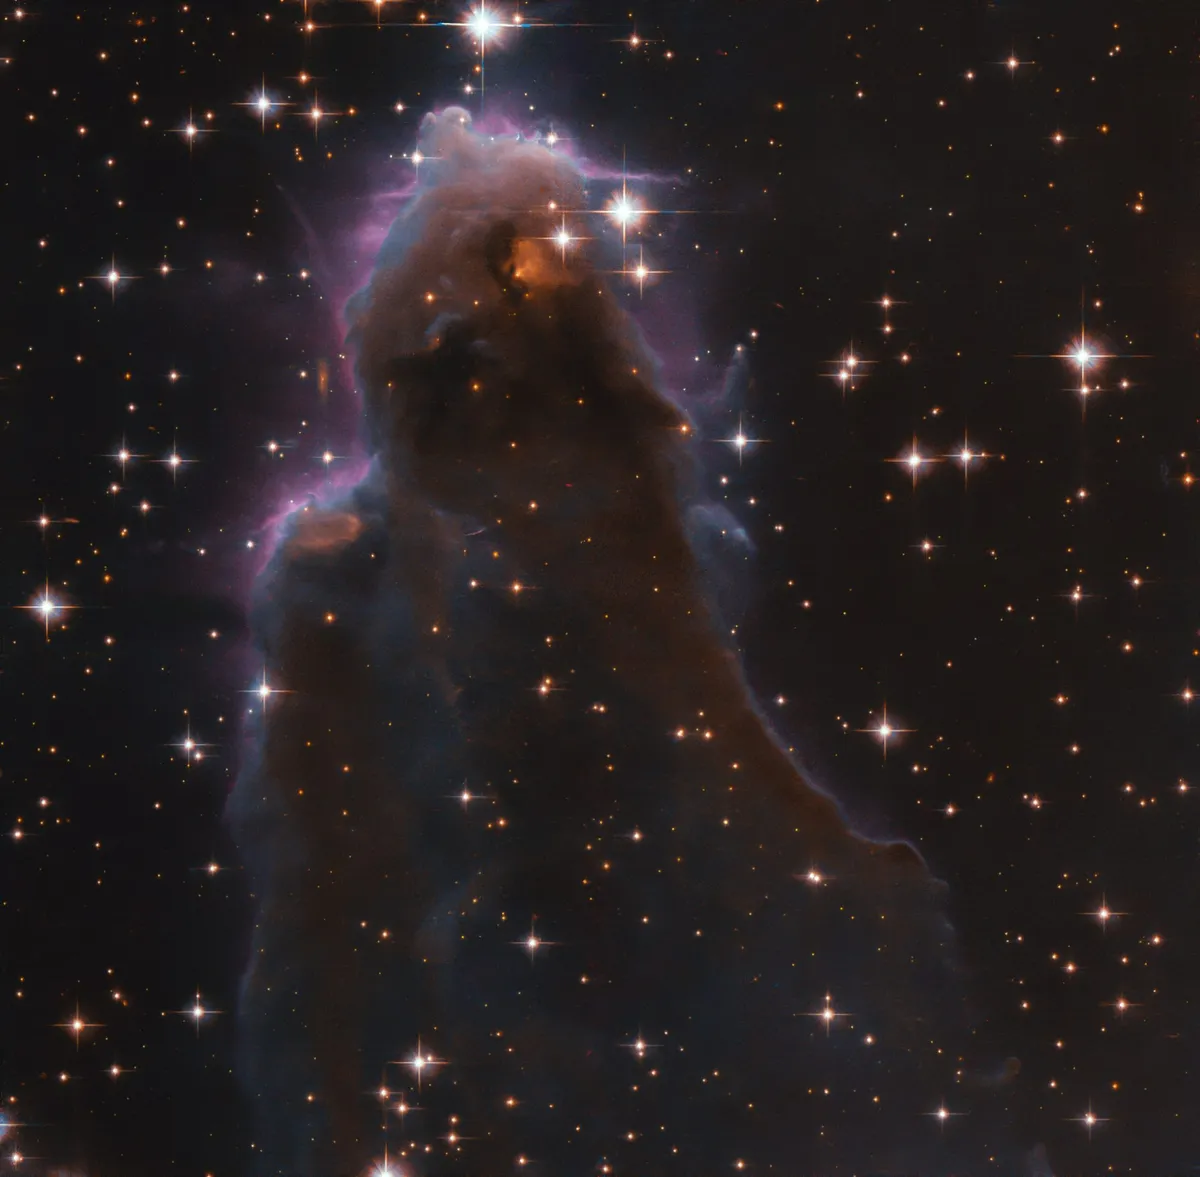 Free-floating Gaseous Globules. Credit ESA/Hubble & NASA, R. Sahai